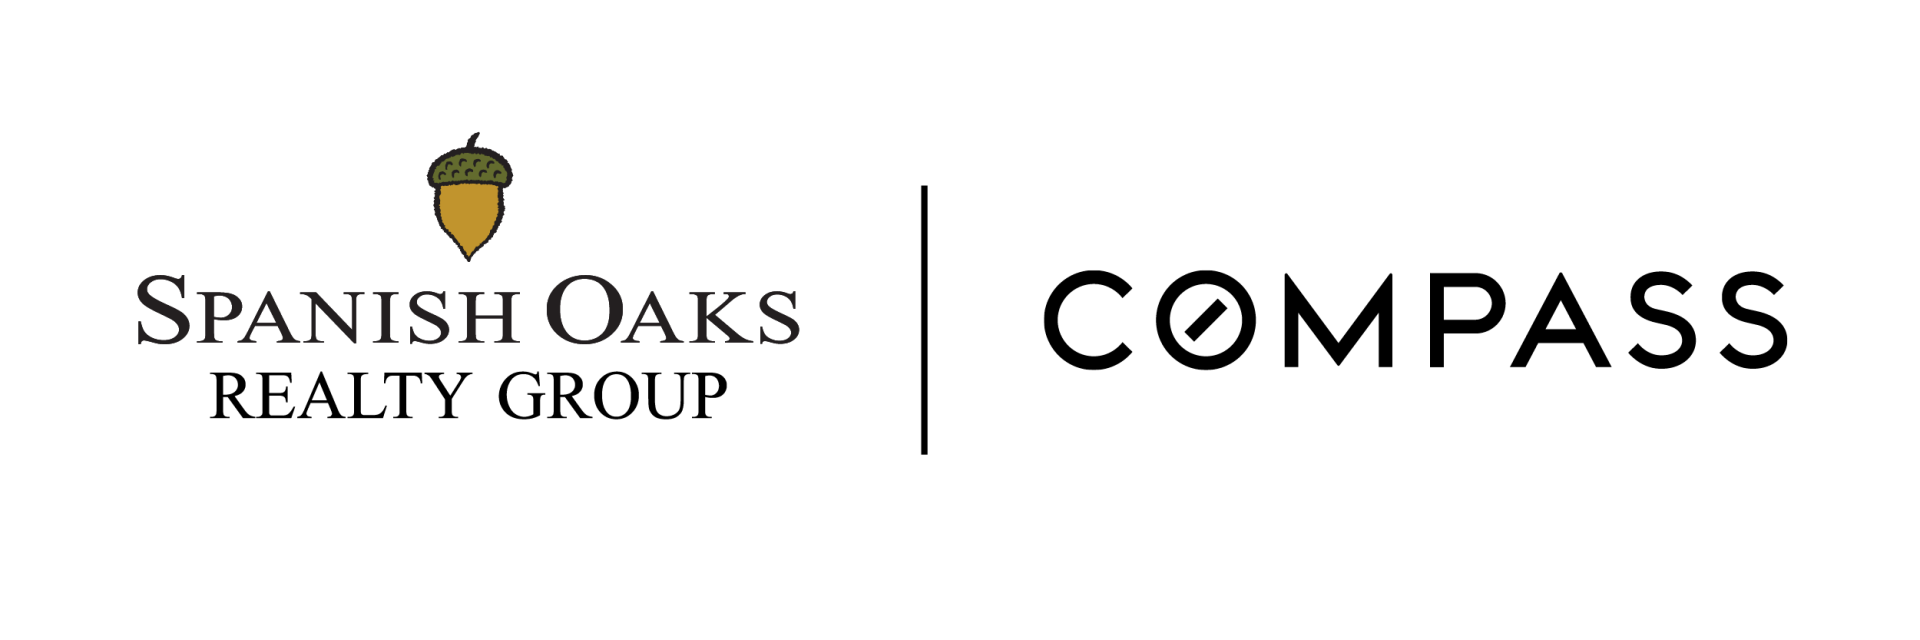 Spanish Oaks Reality Group & Compass Logos